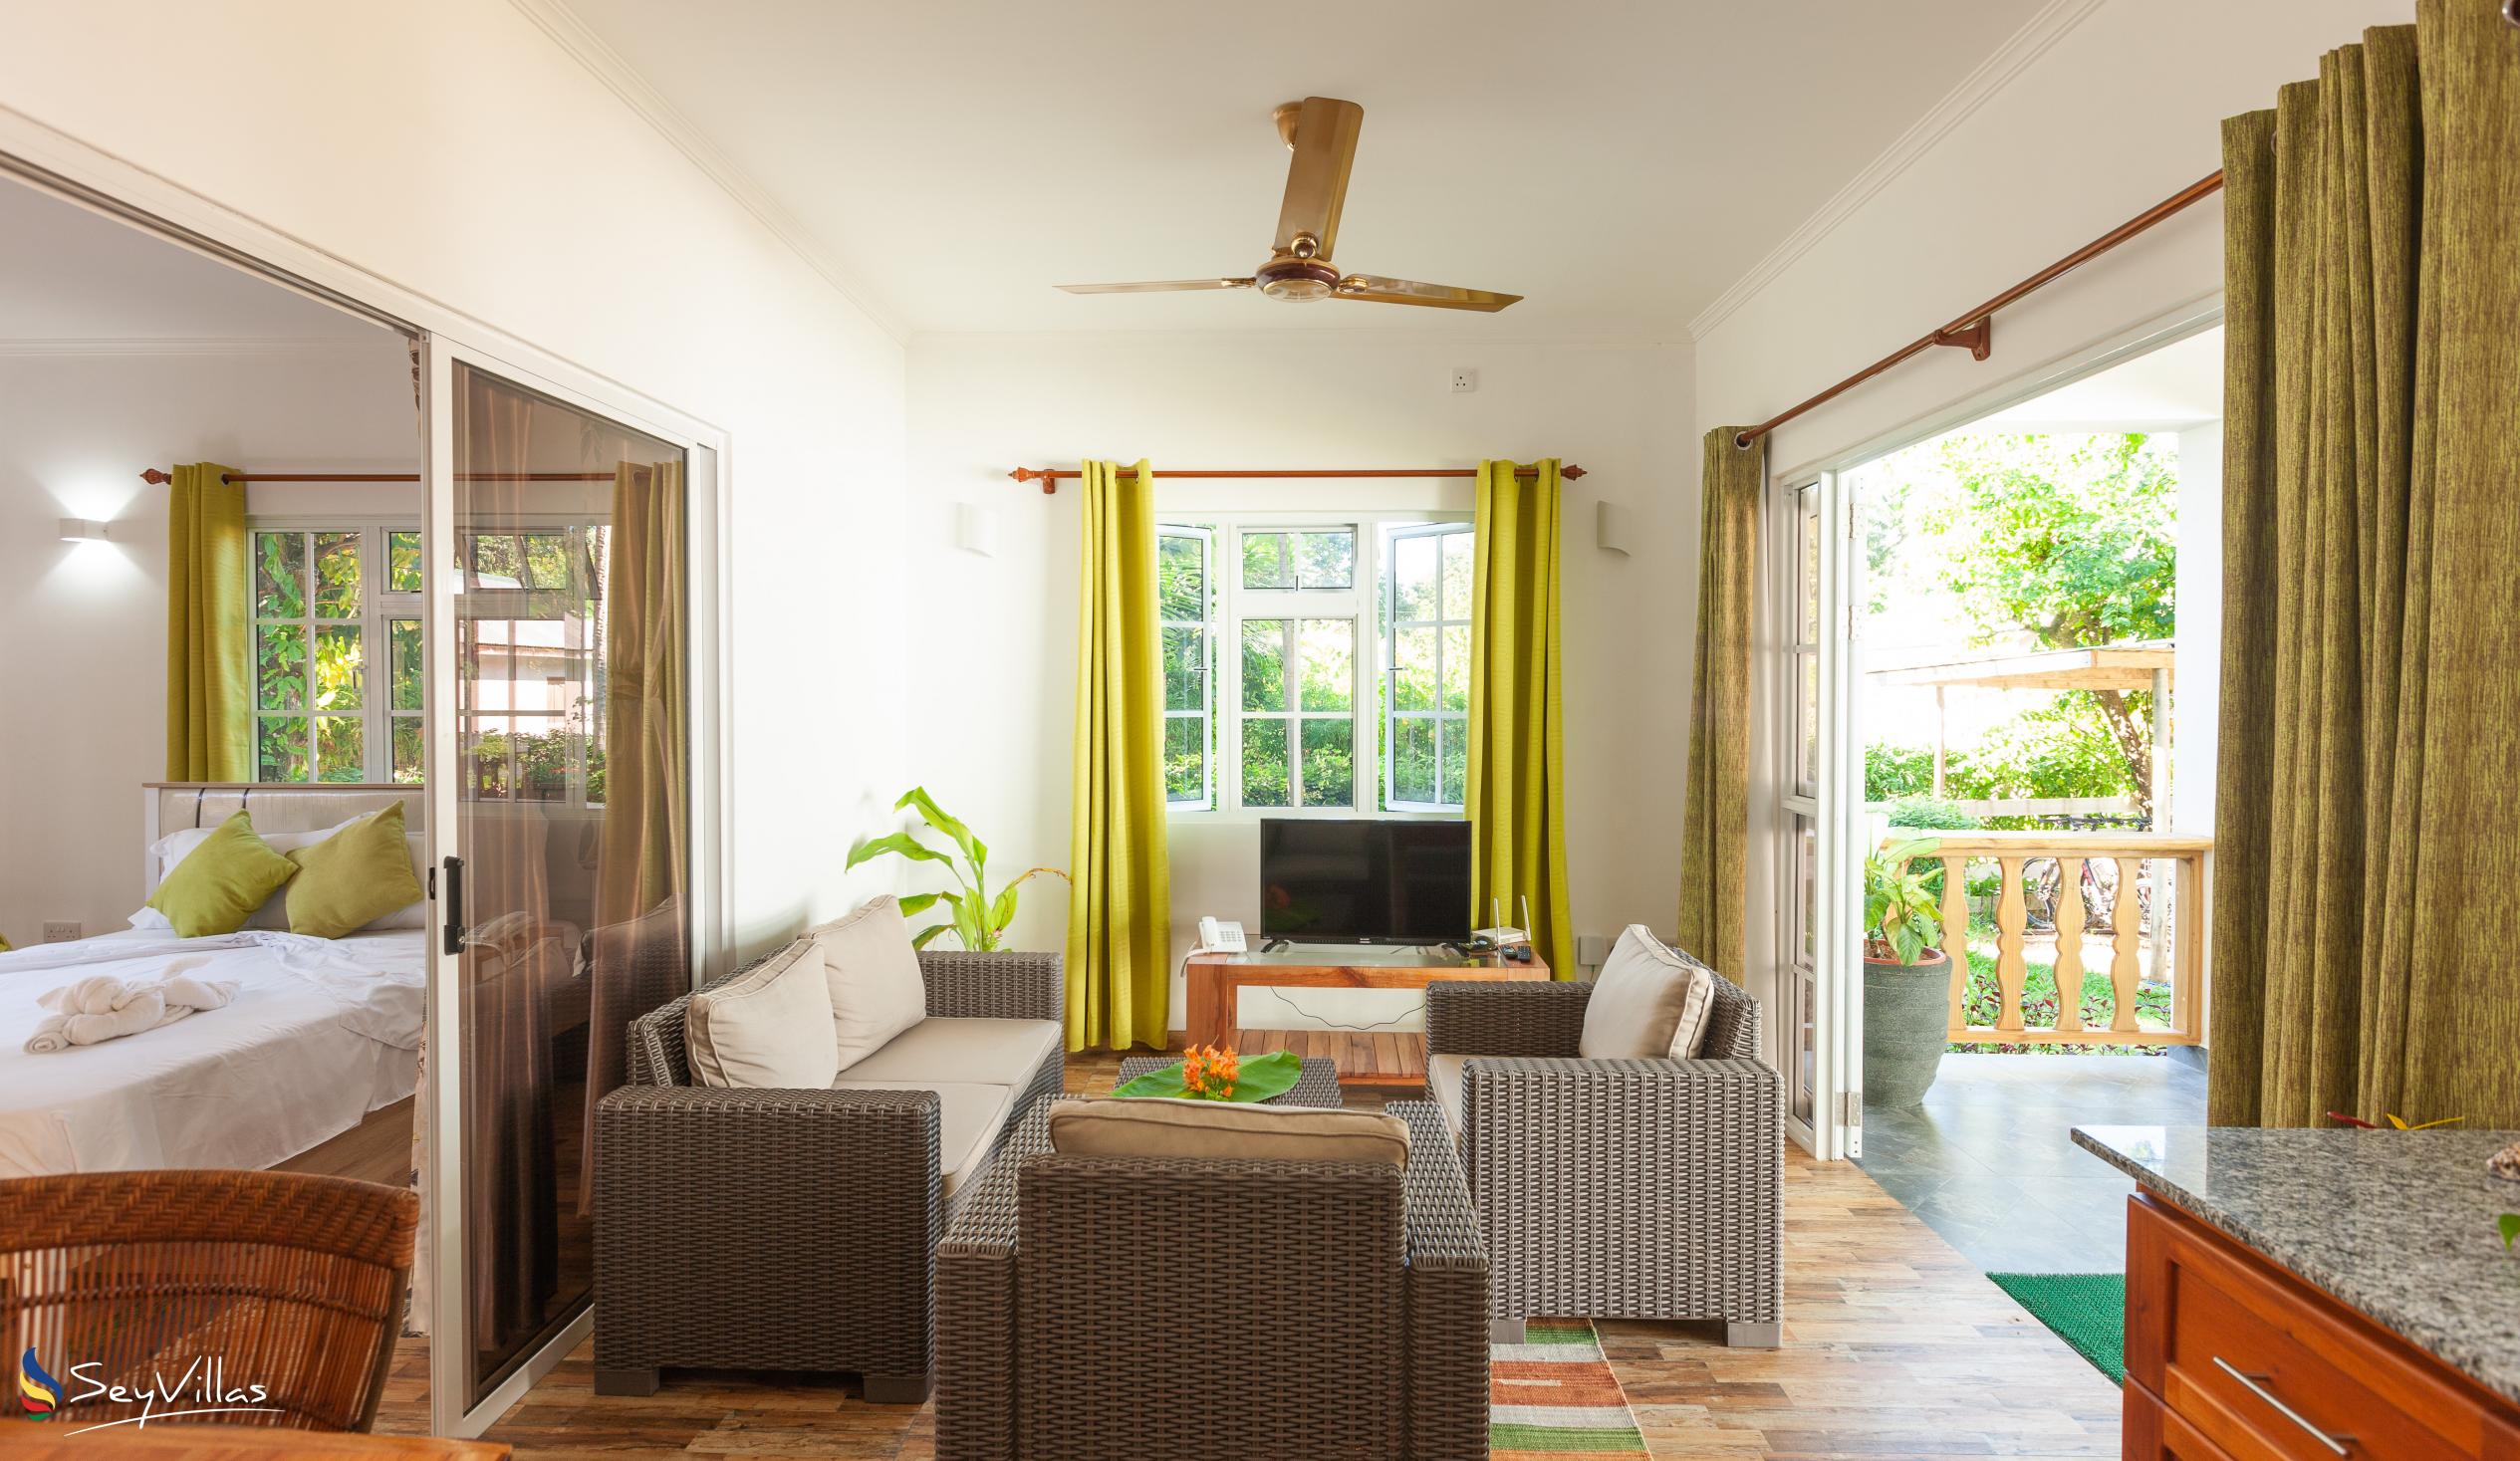 Foto 31: Villa Charette - Appartement mit Gartenblick - La Digue (Seychellen)